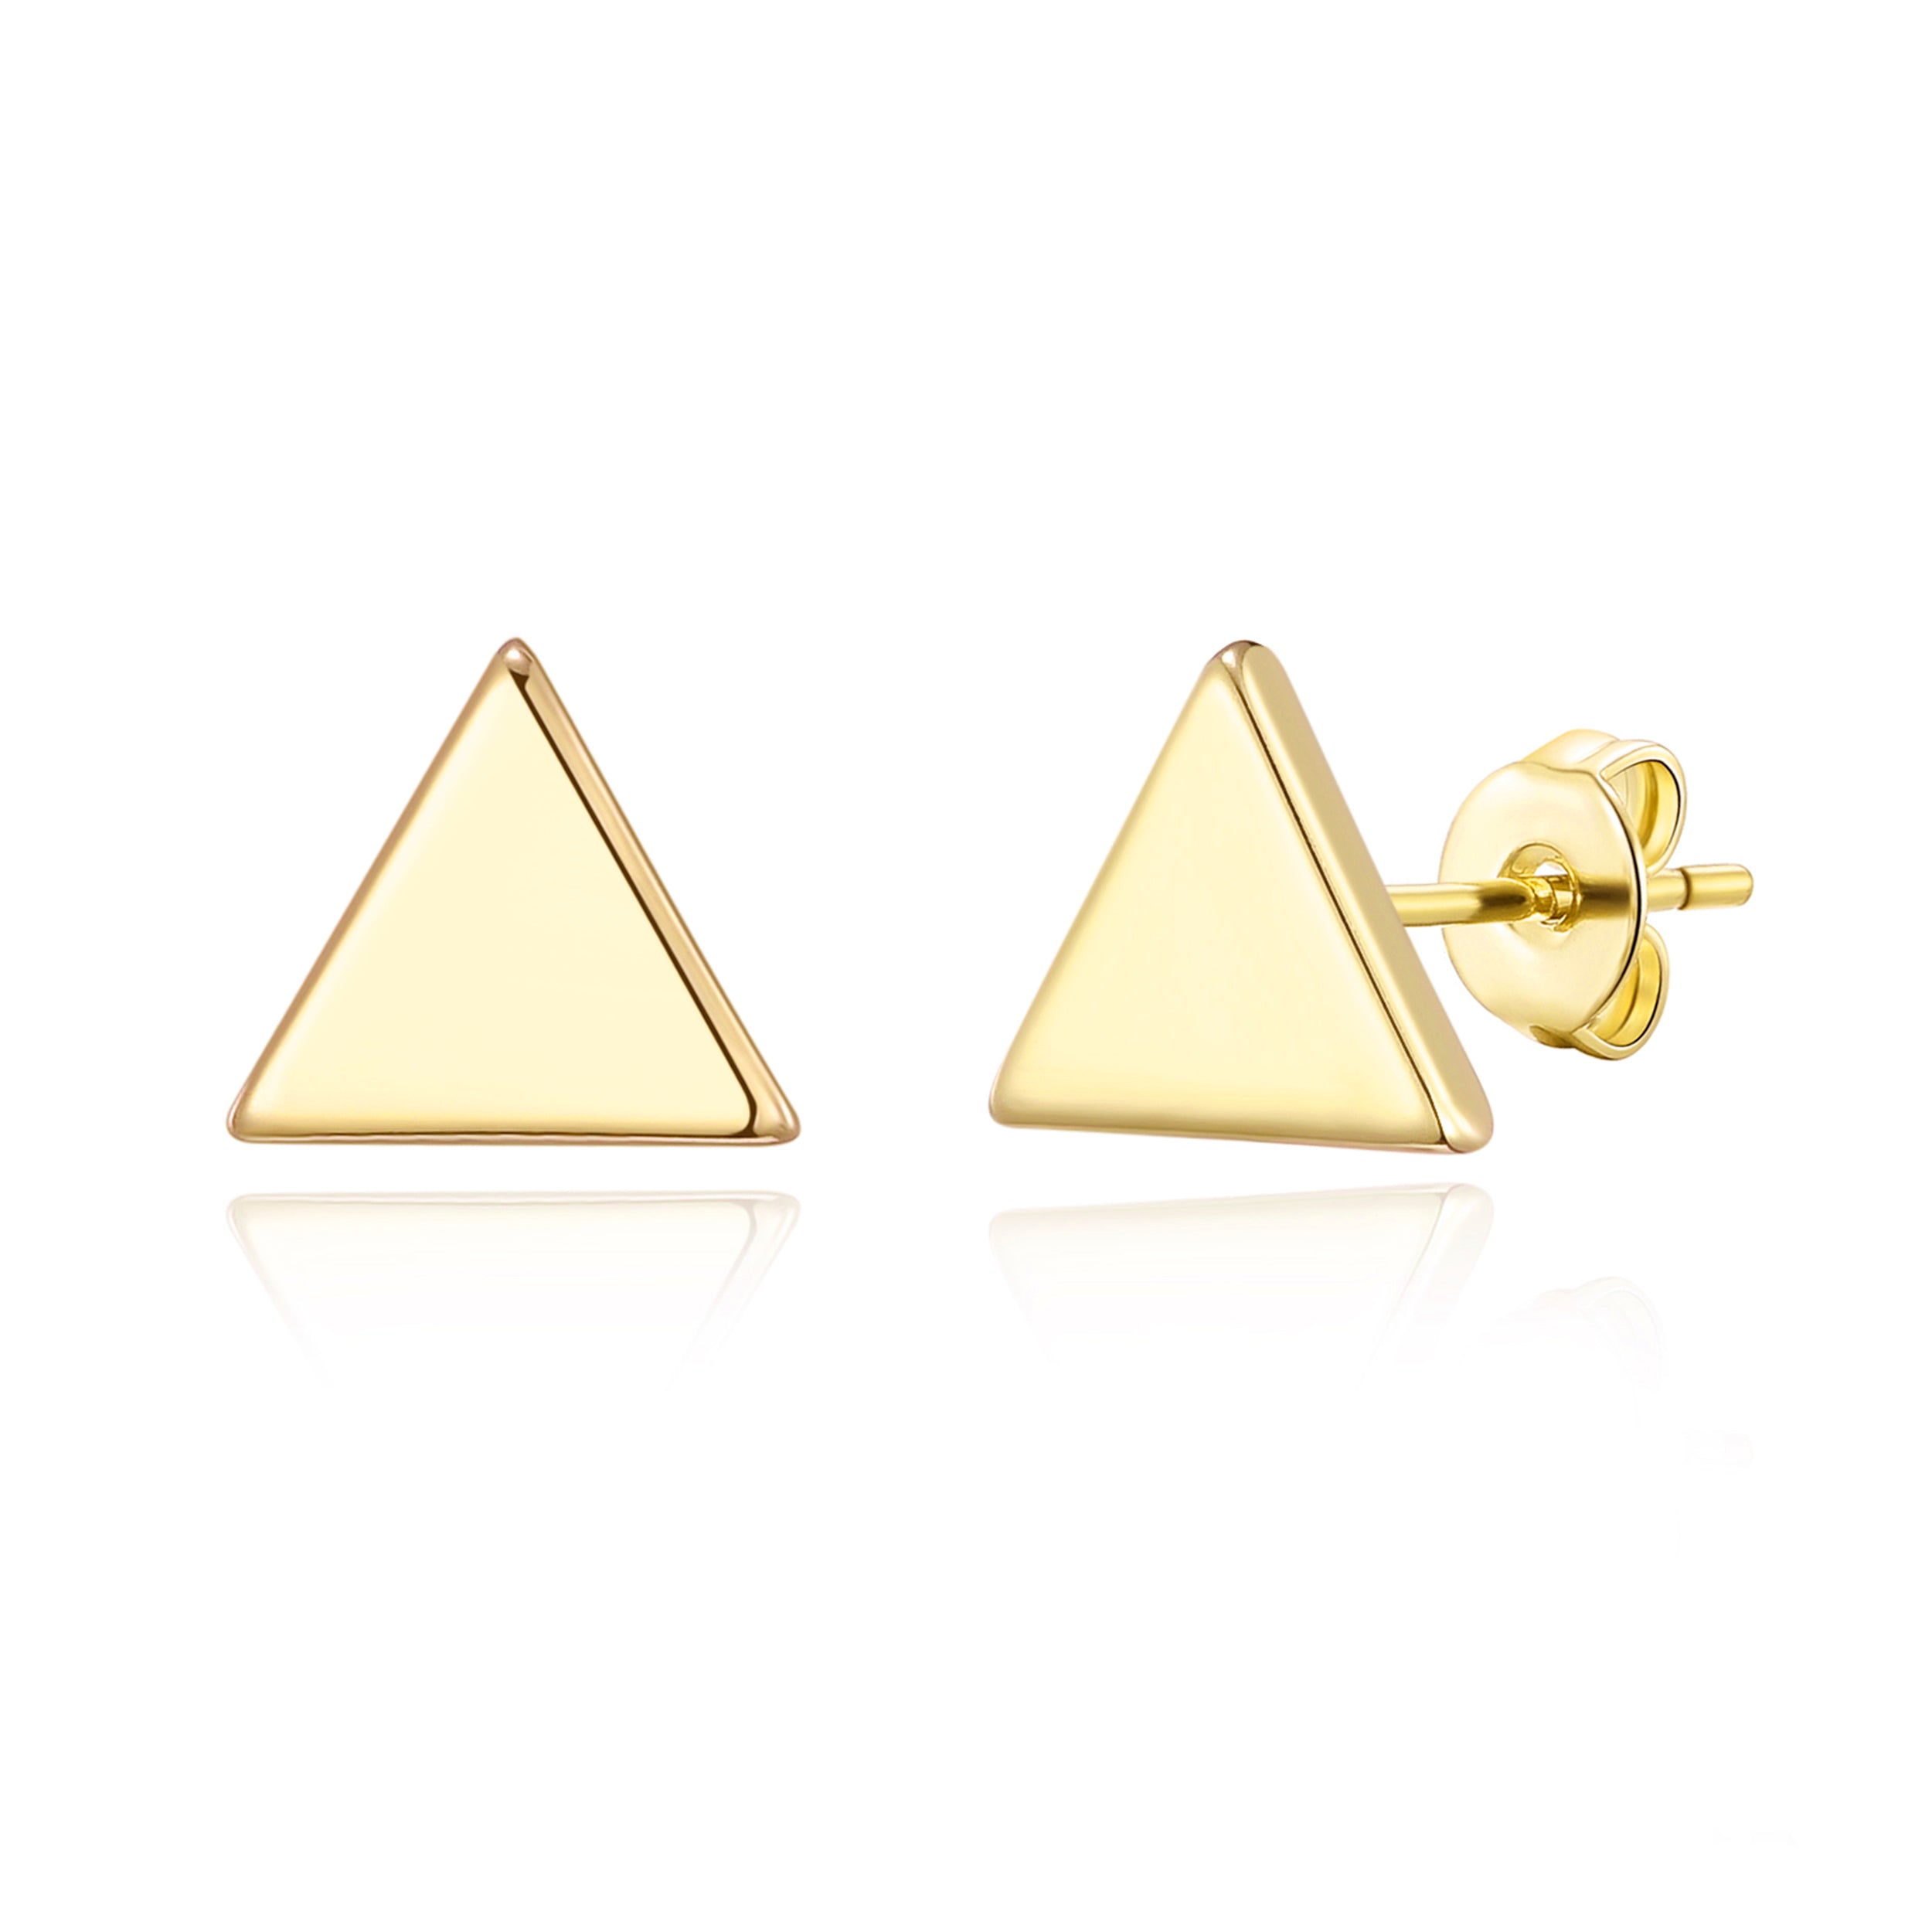 Gold Plated Triangle Stud Earrings by Philip Jones Jewellery